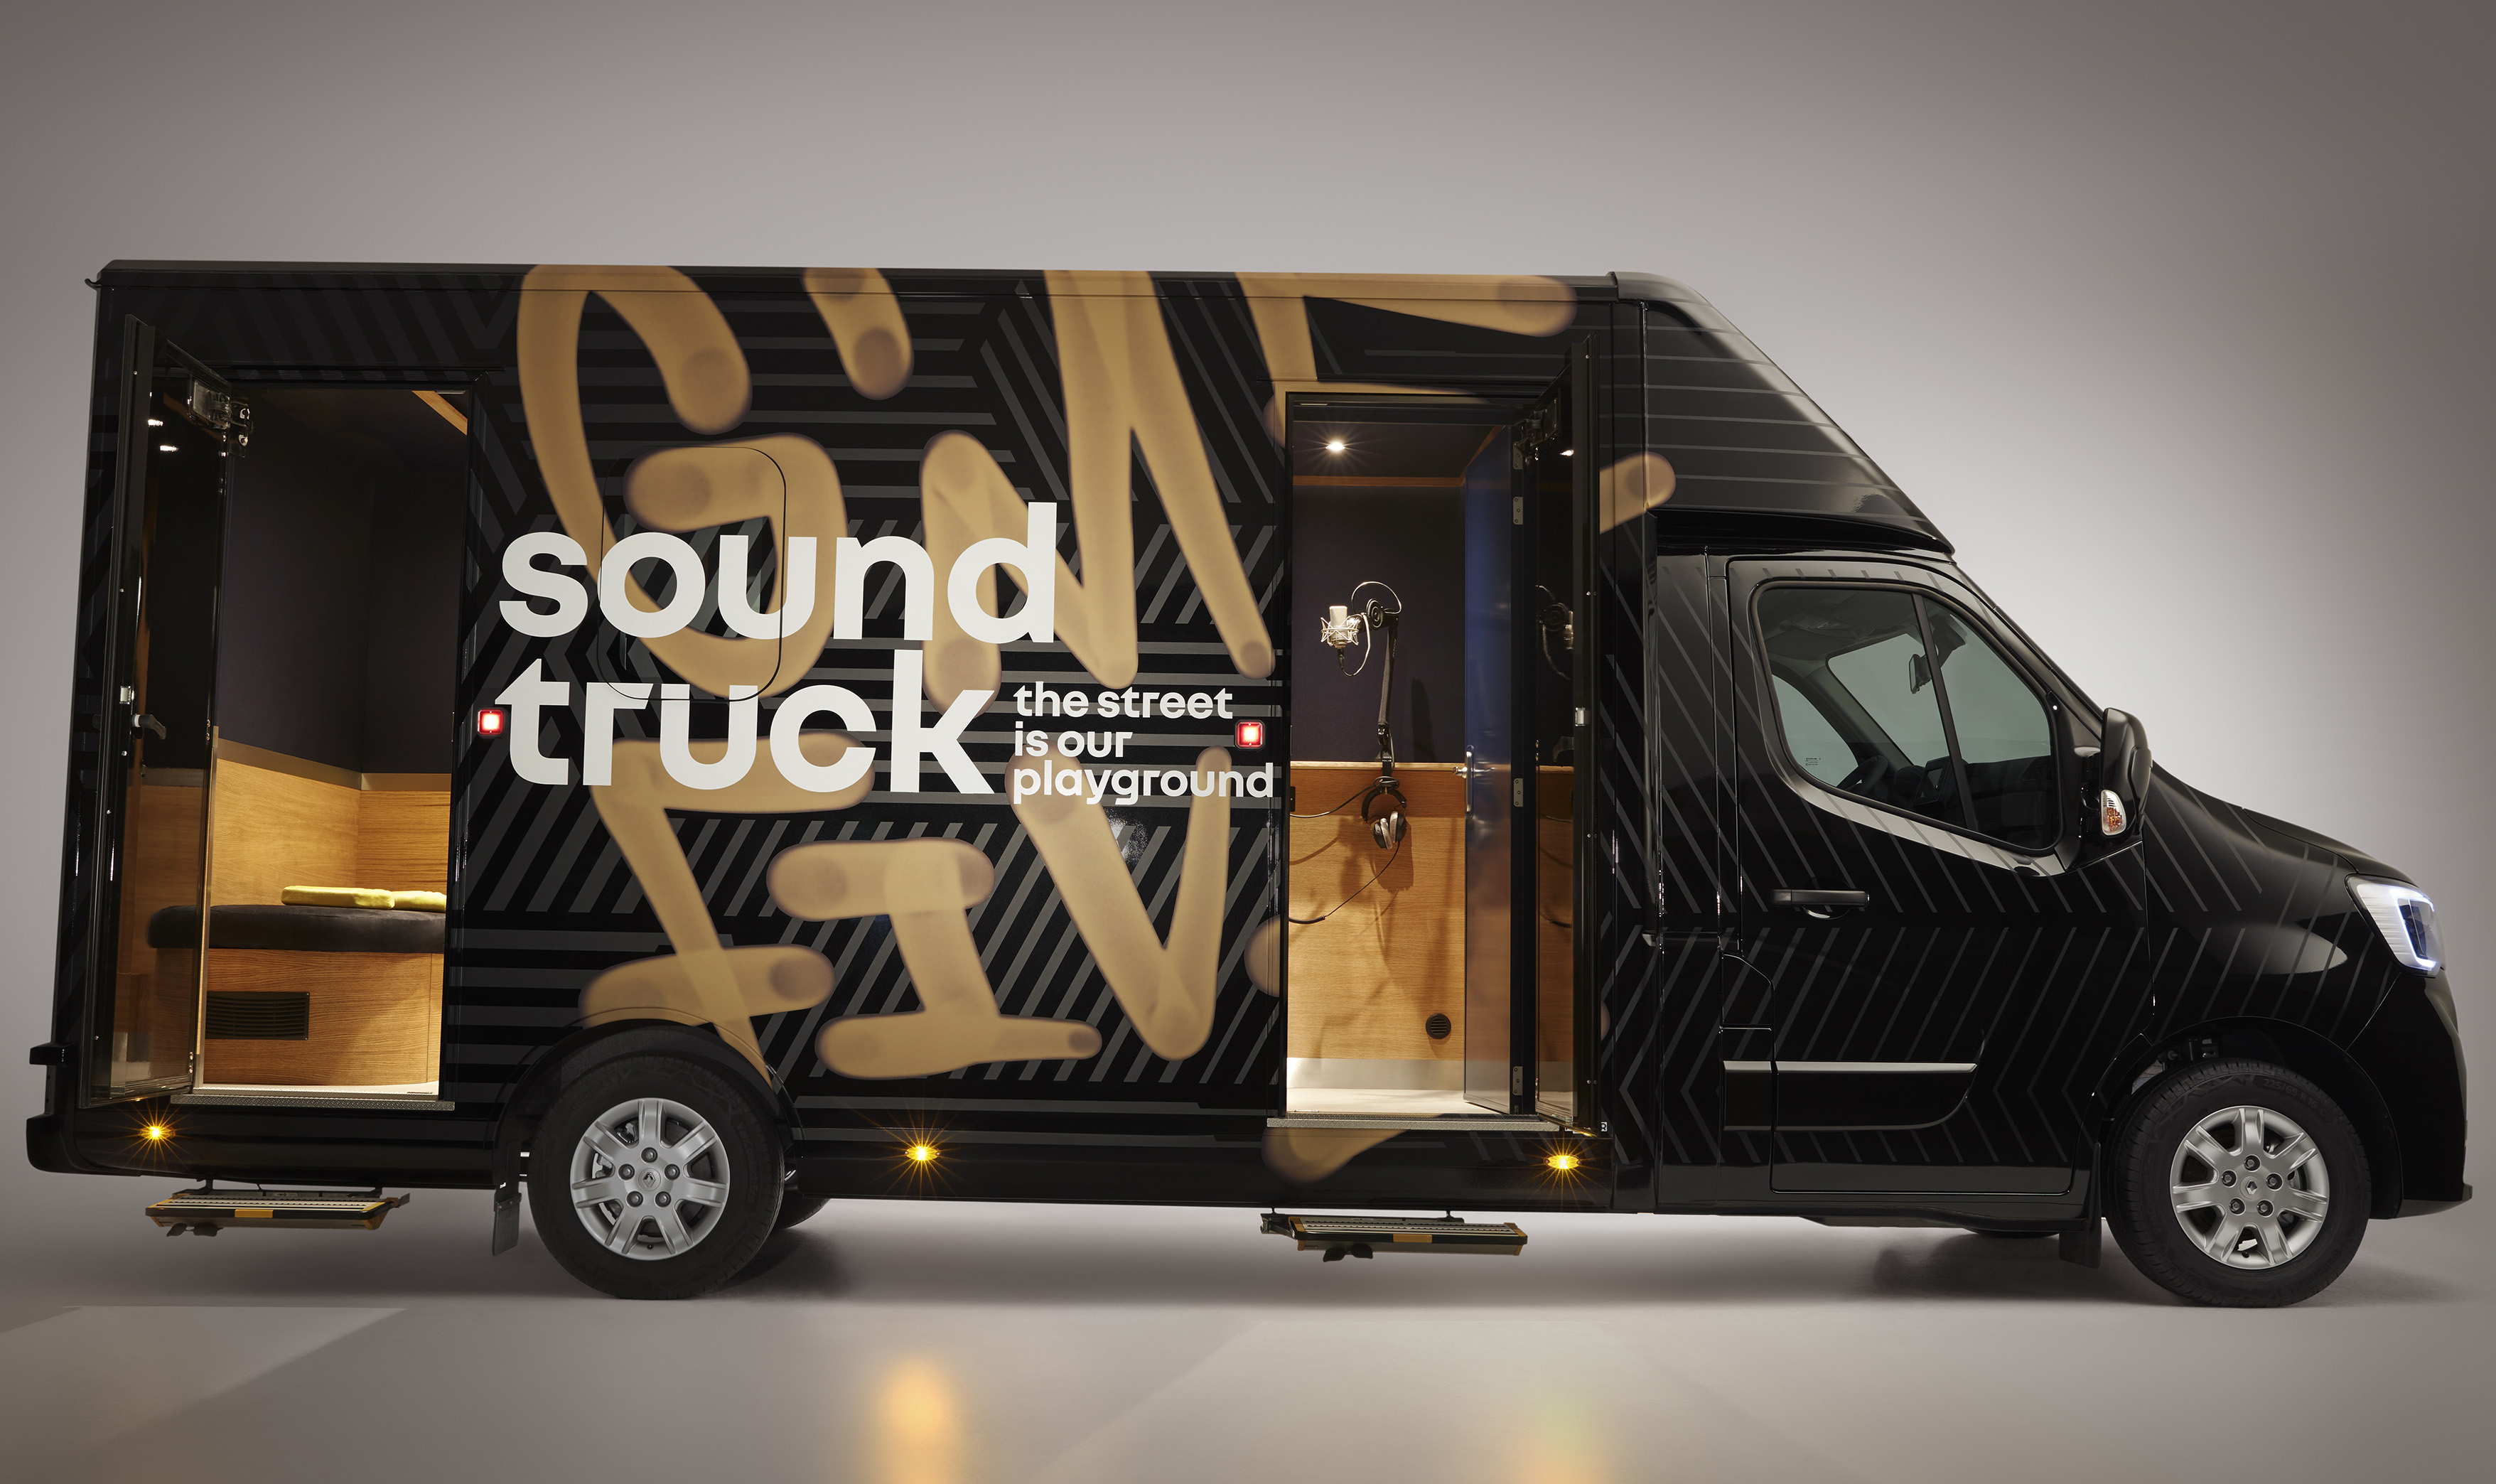 Renault Soundtruck - SoyMotor.com